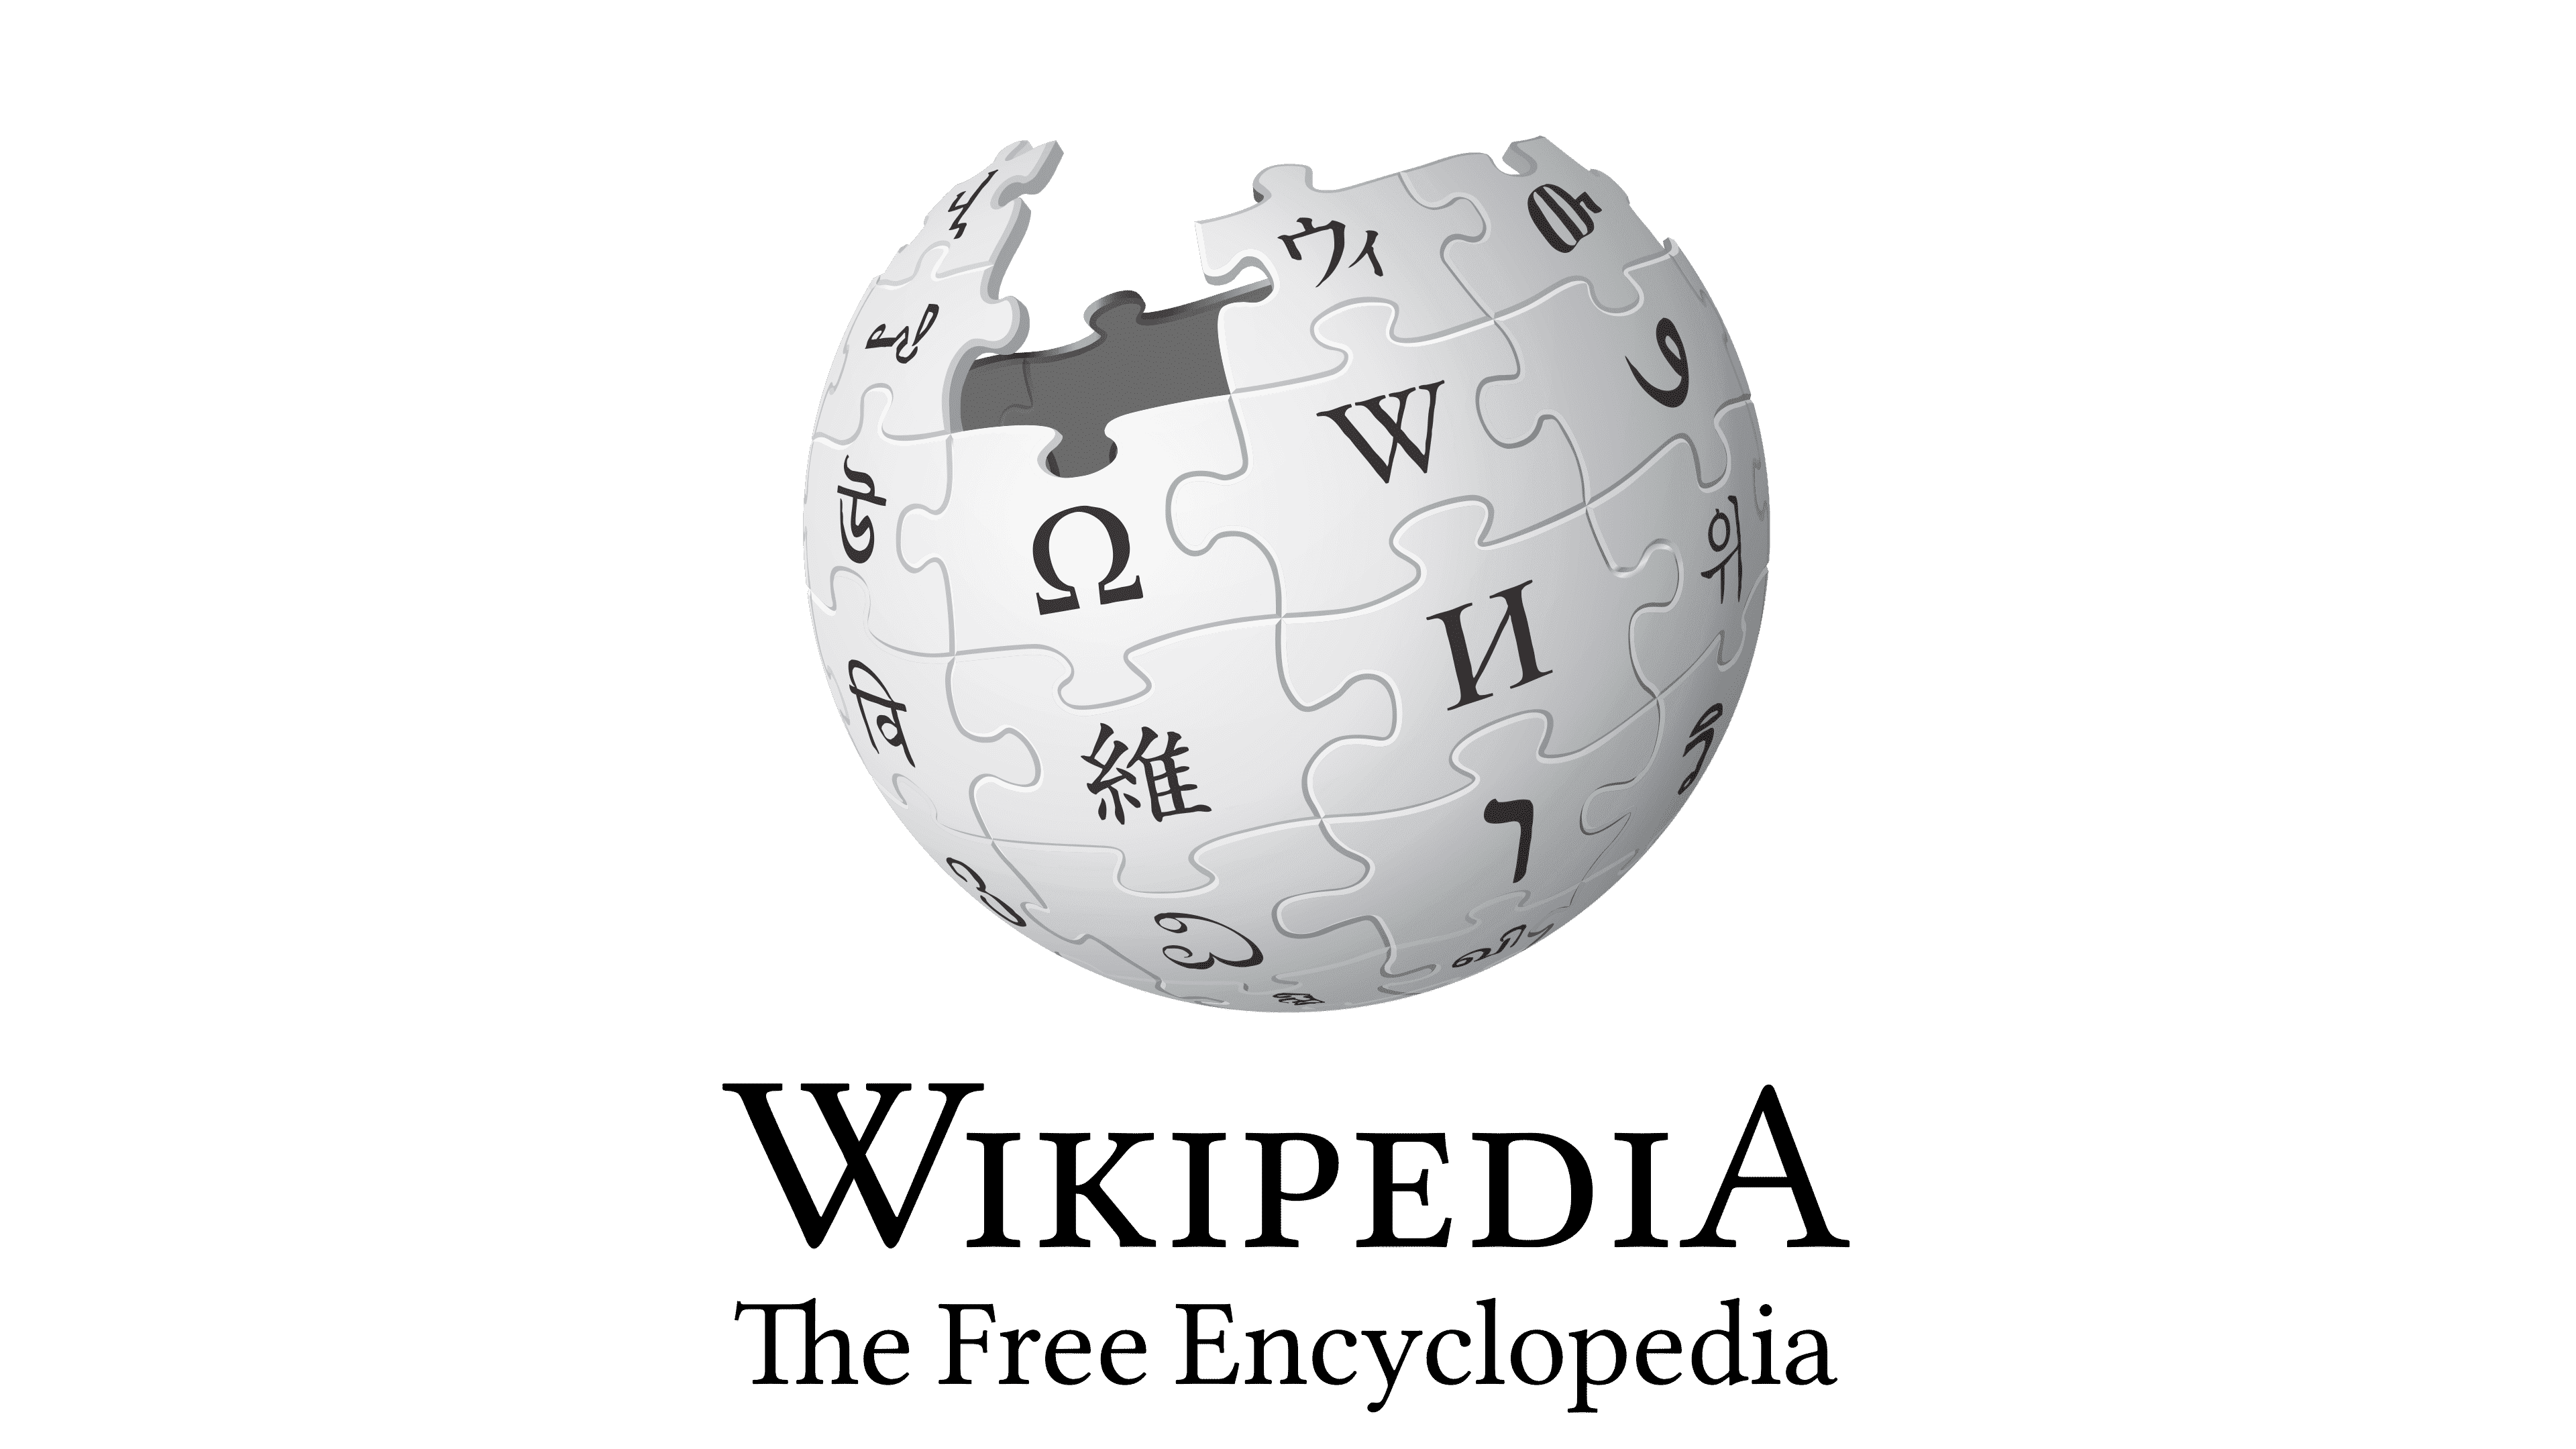 History of virtual learning environments - Wikipedia